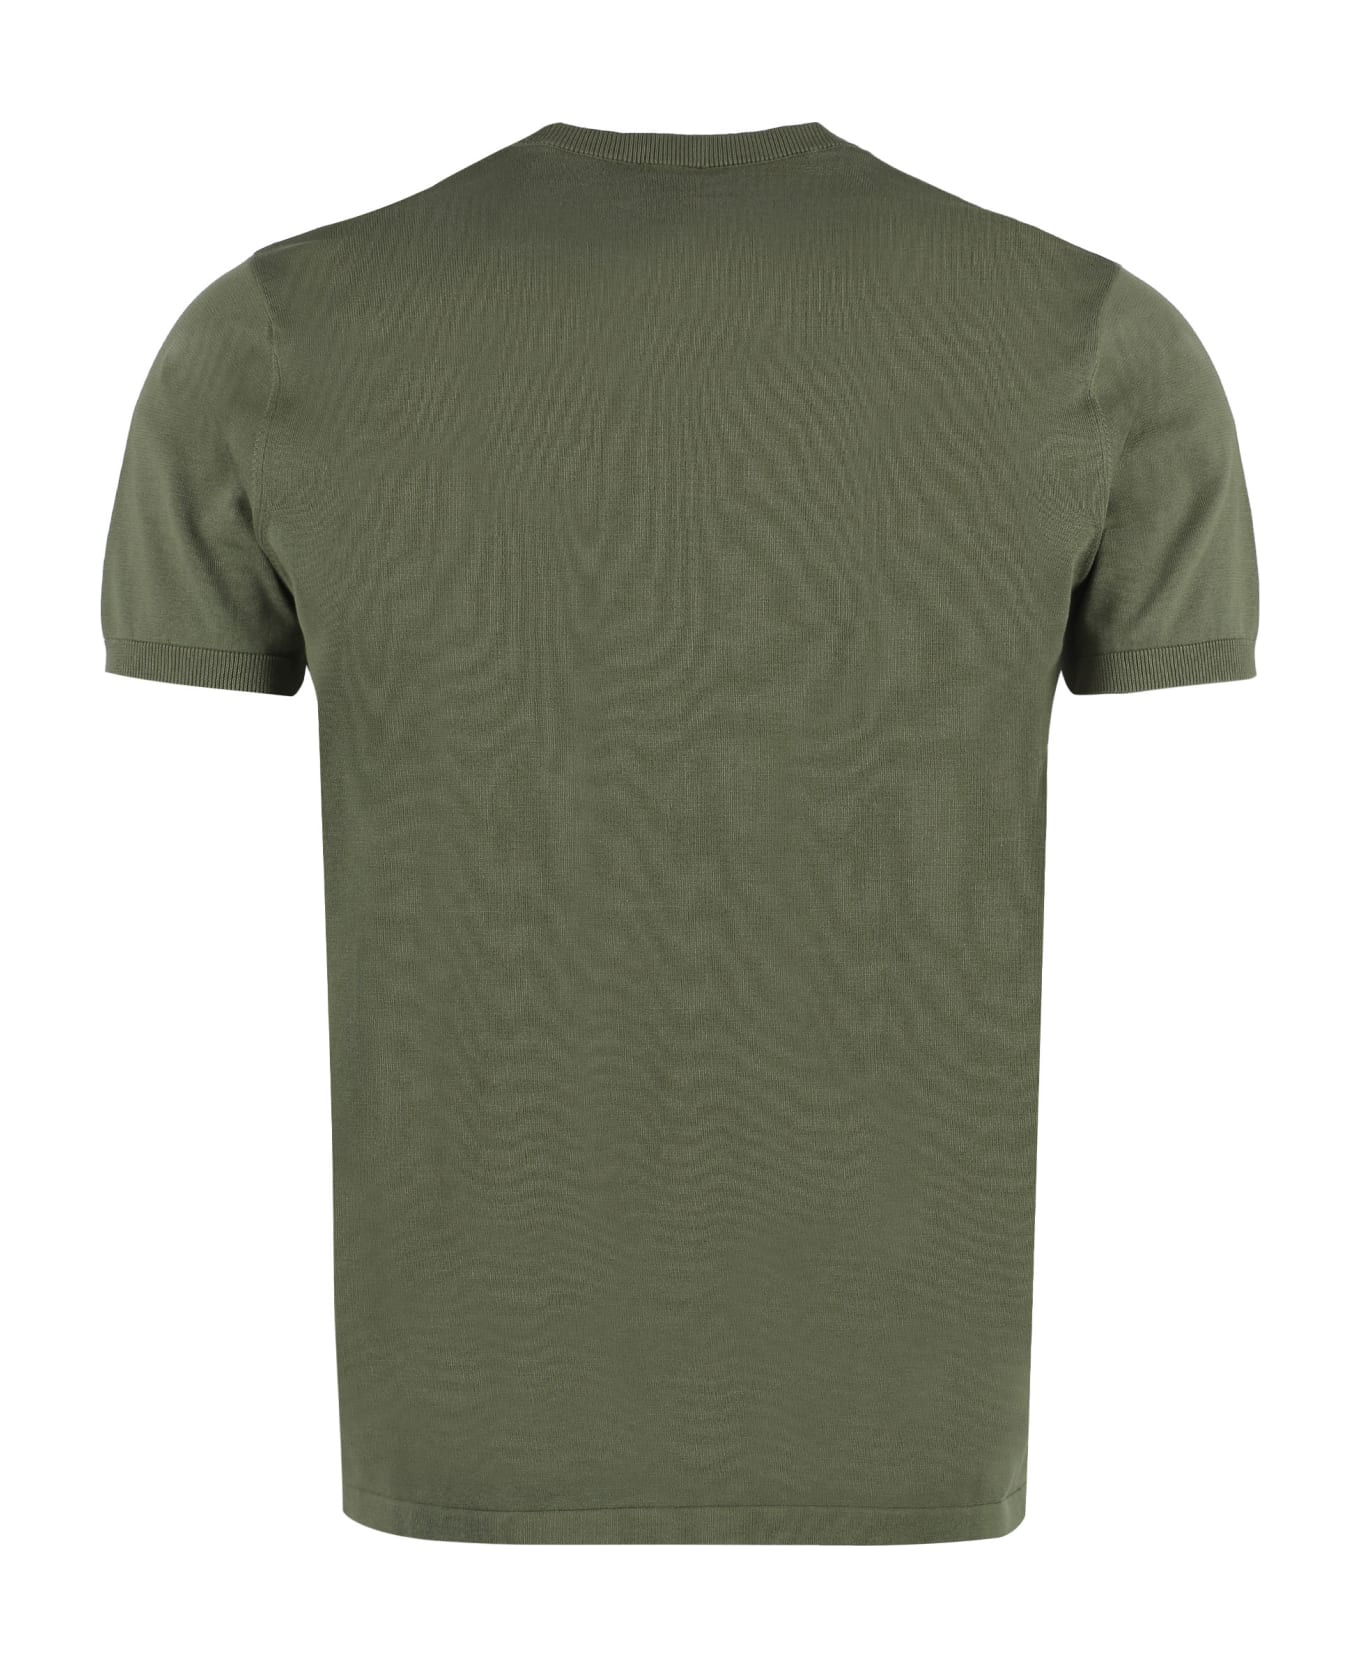 Aspesi Cotton Knit T-shirt - green